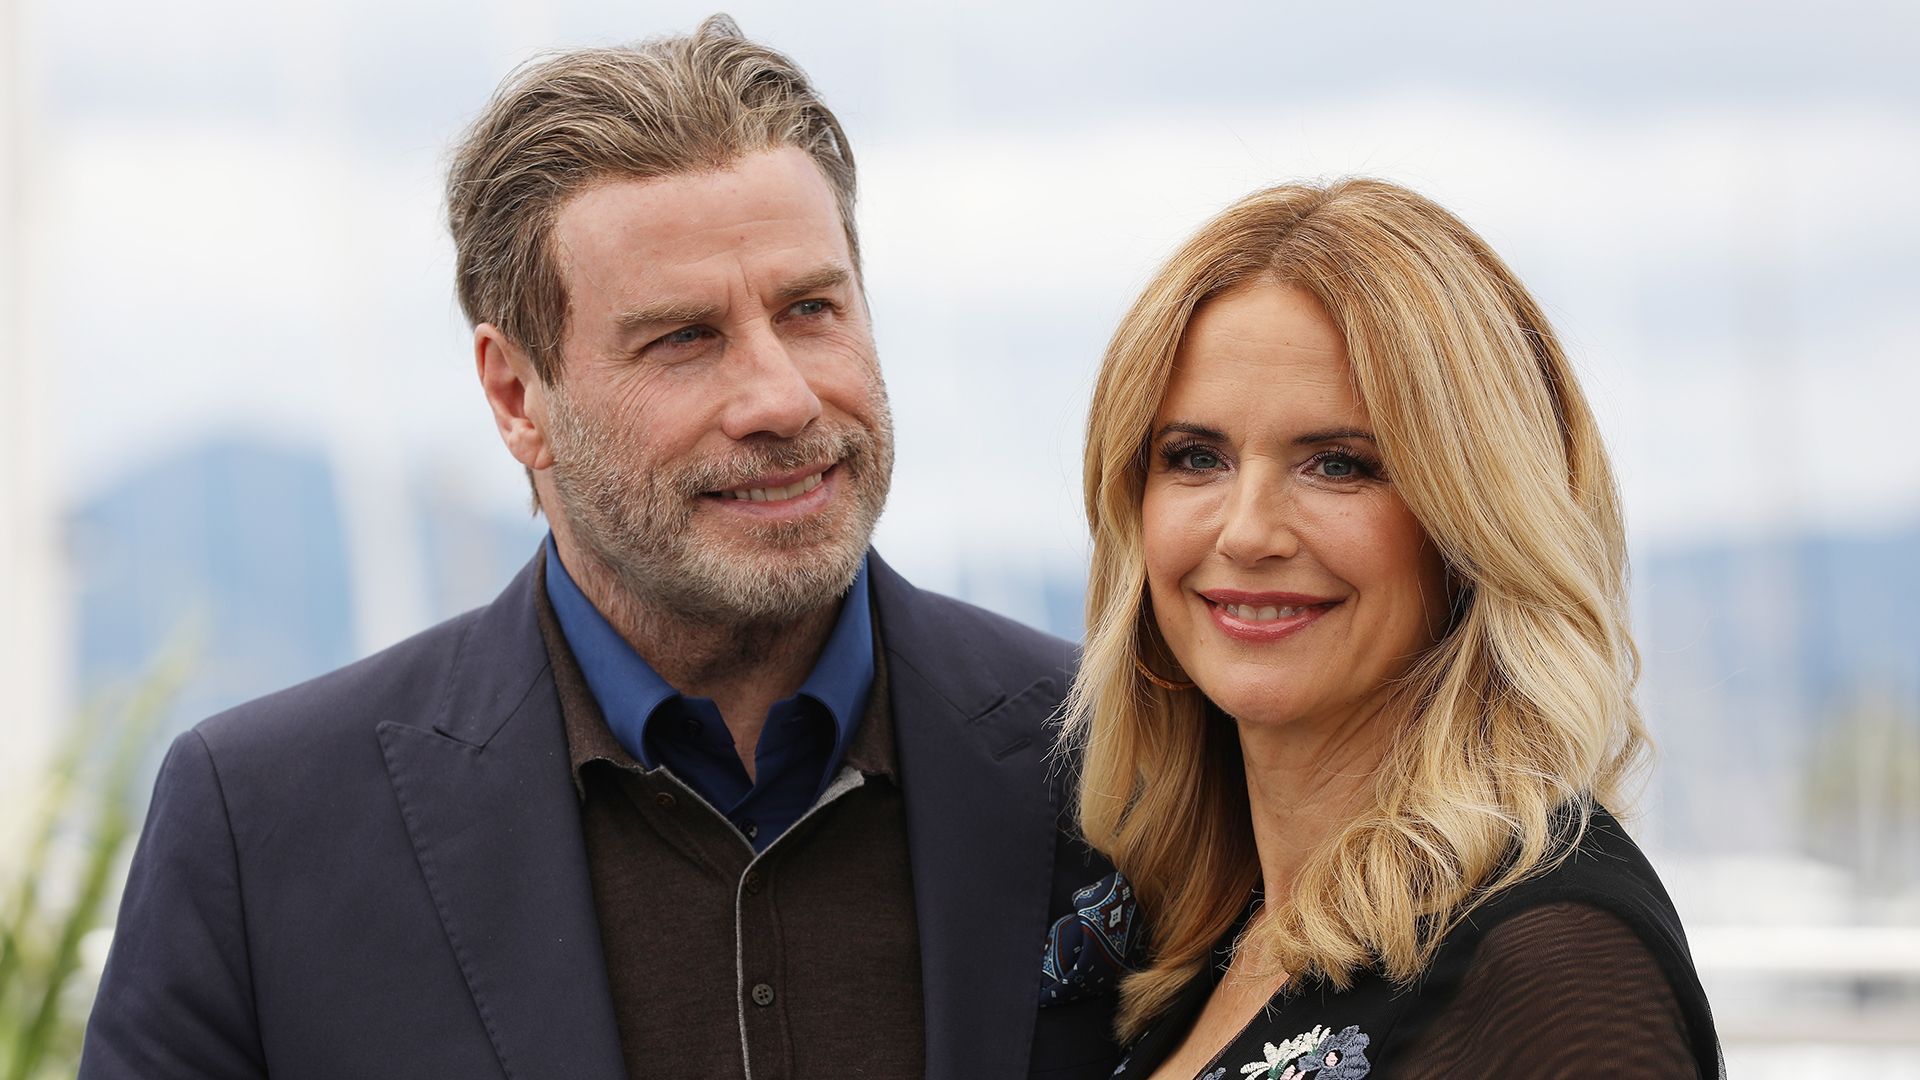 John Travolta and Kelly Preston at Cannes Film Festival in 2018